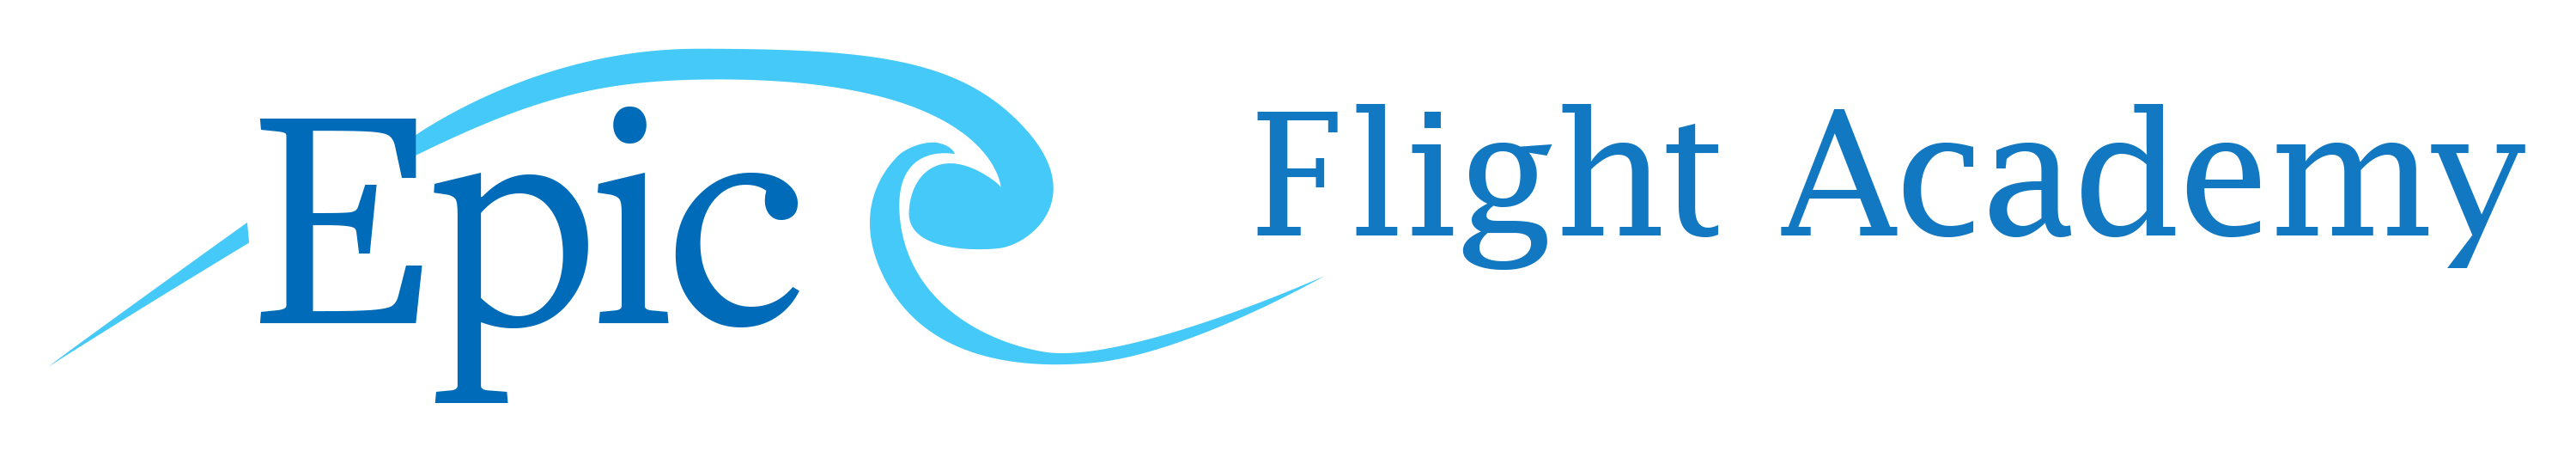 Epic Flight Academy Color Logo Transparent Background